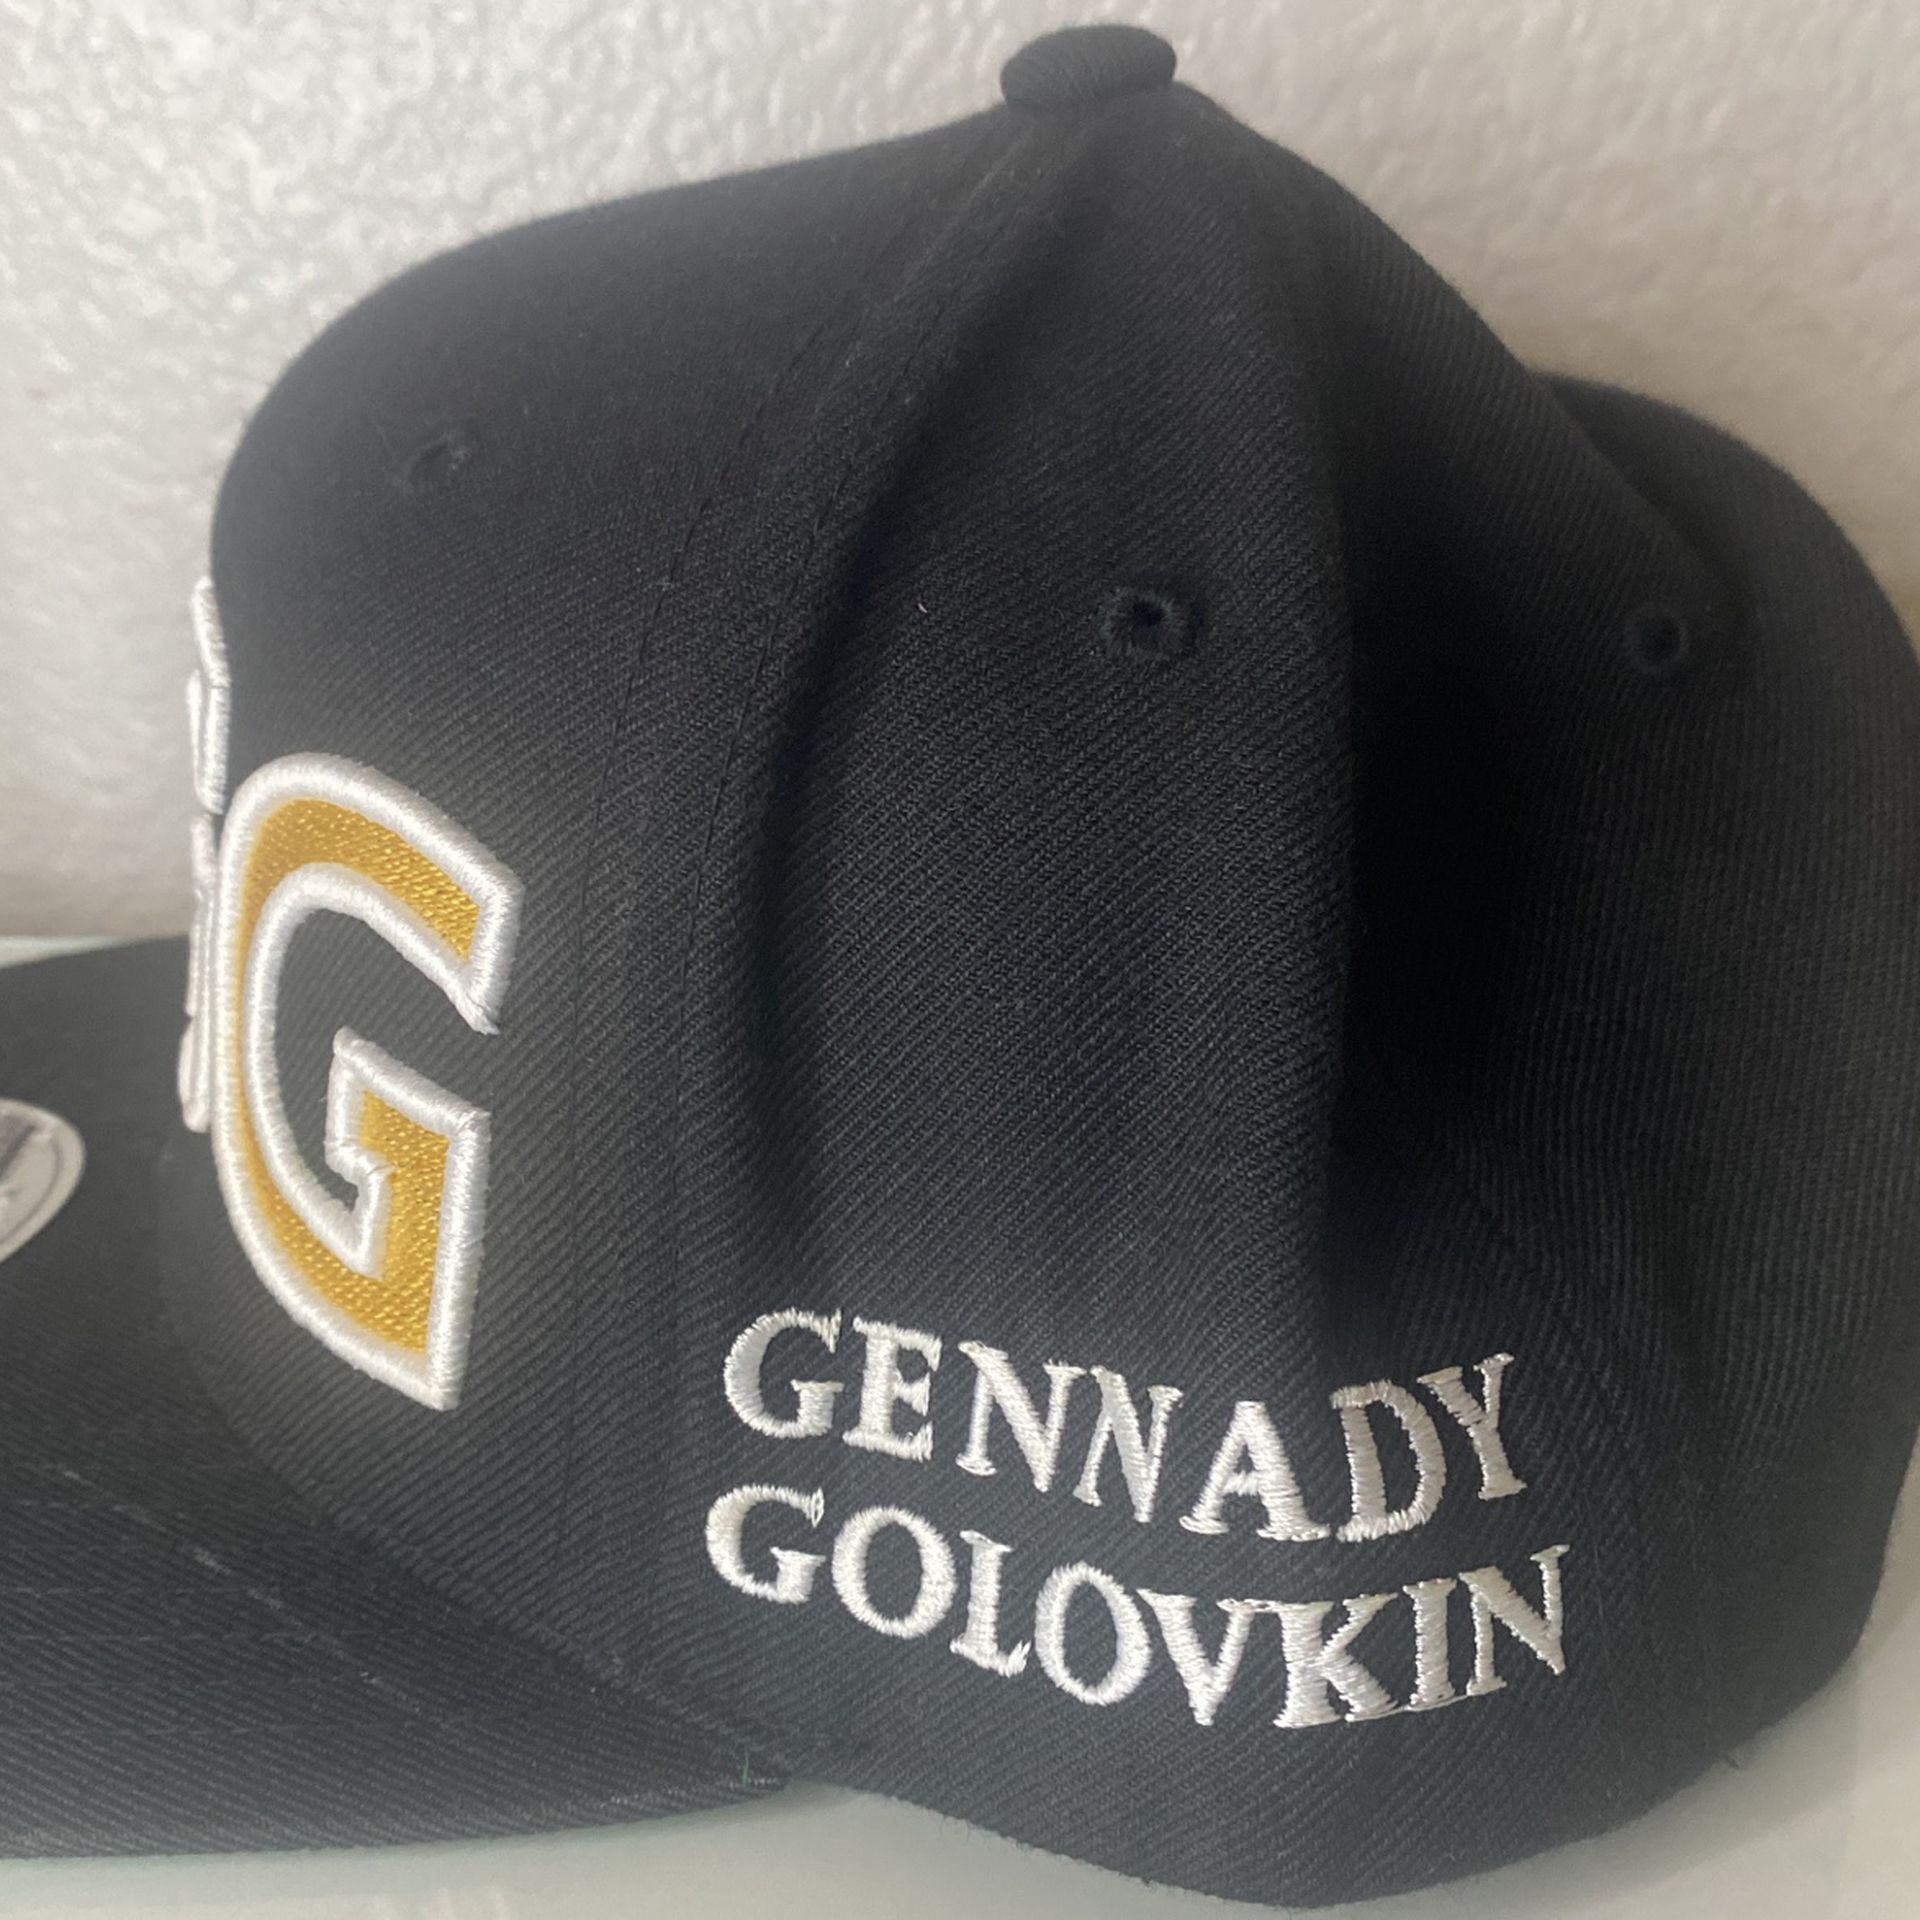 VGK Vegas Golden Knights Fanatics SnapBack hat/cap for Sale in North Las  Vegas, NV - OfferUp